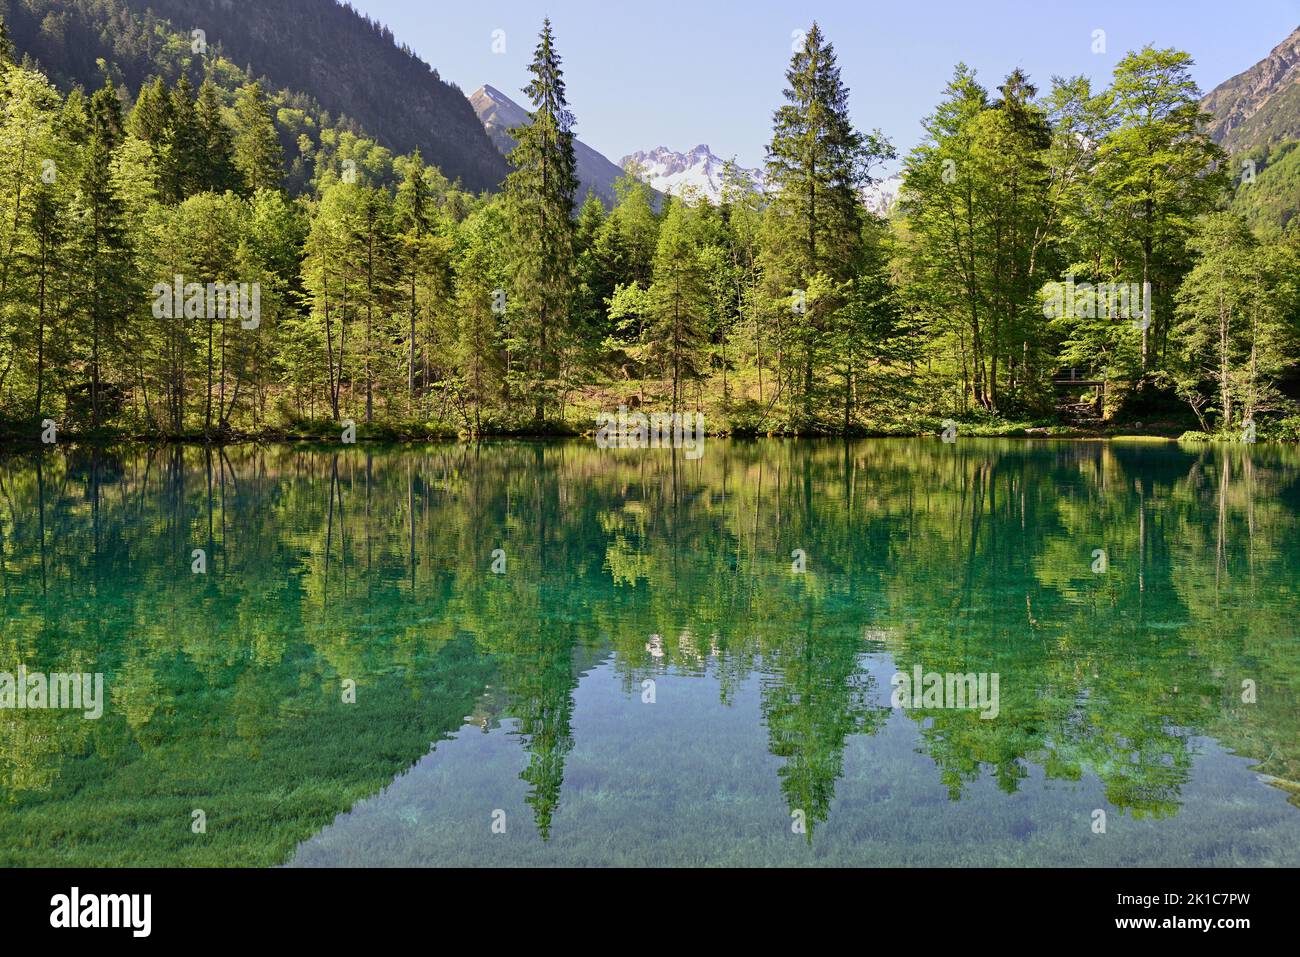 Mountain lake, Christlessee with clear turquoise water, Trettachtal near Oberstdorf, Allgaeu Alps, Allgaeu, Bavaria, Germany Stock Photo